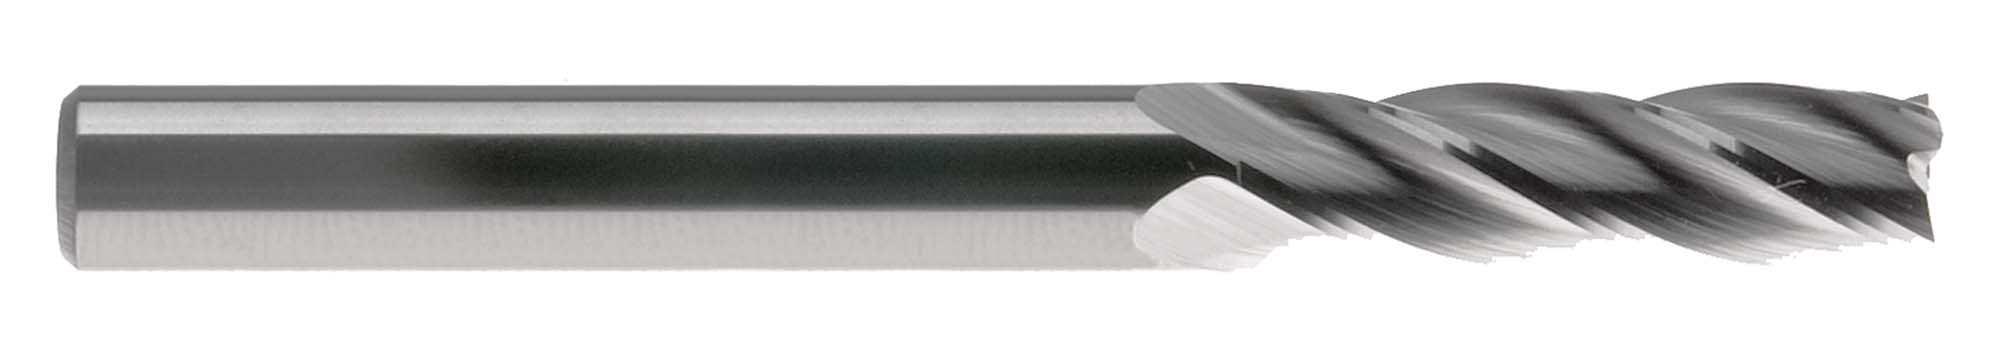 E710-1/8 1/8" 4 Flute Long USA Solid Micrograin Carbide End Mill